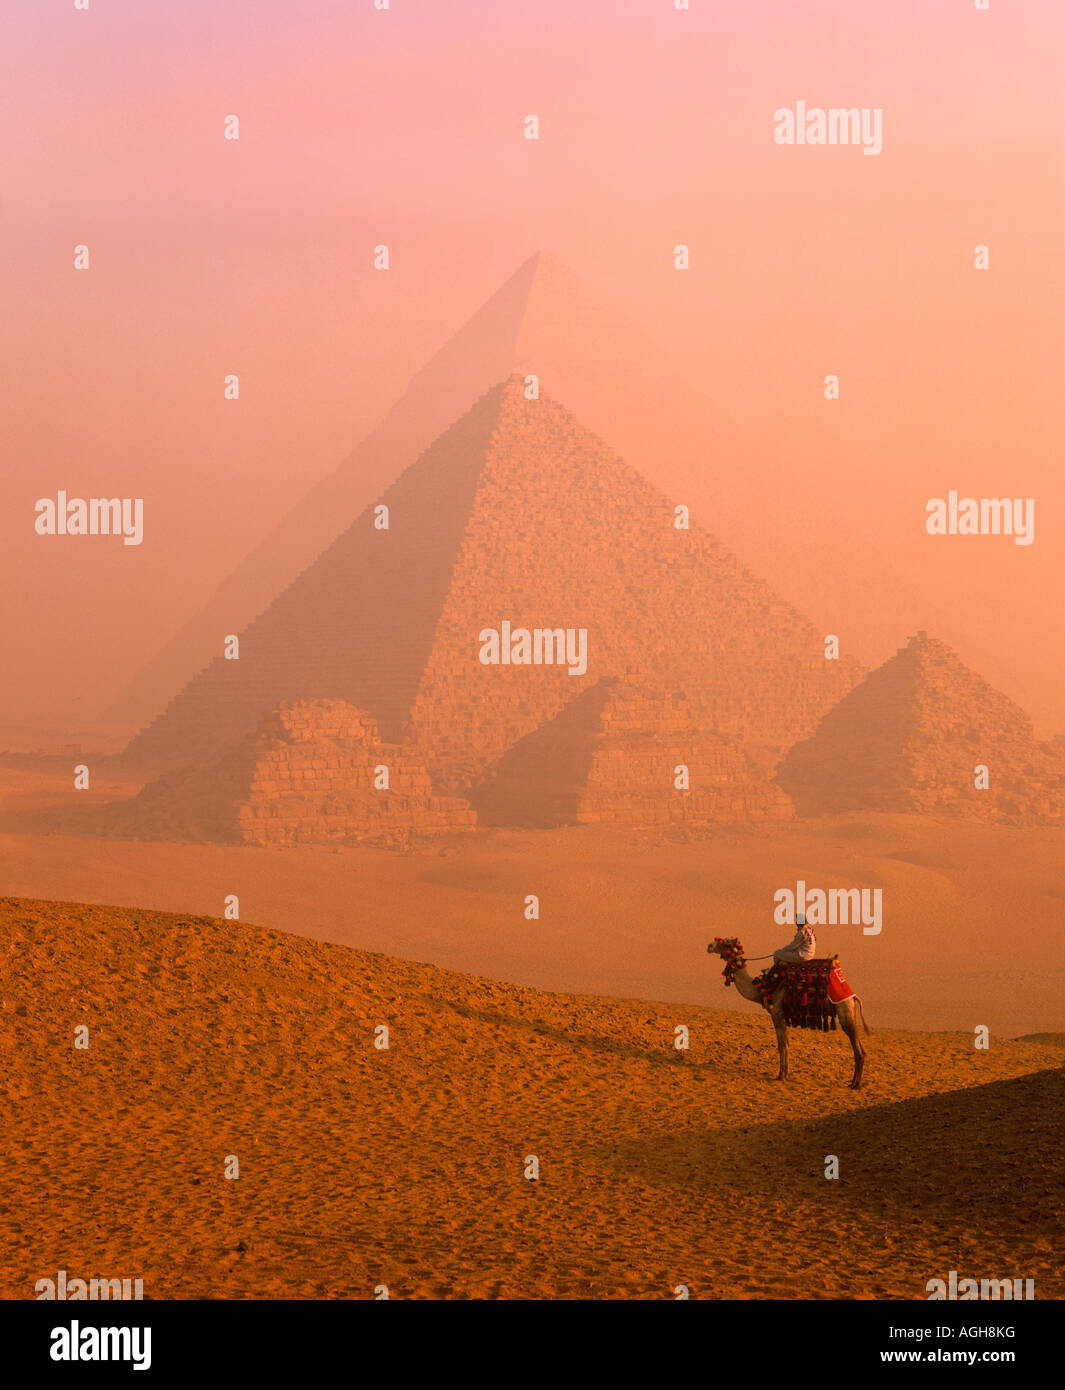 Kamele bei den Pyramiden, Gizeh, Ägypten Stockfoto